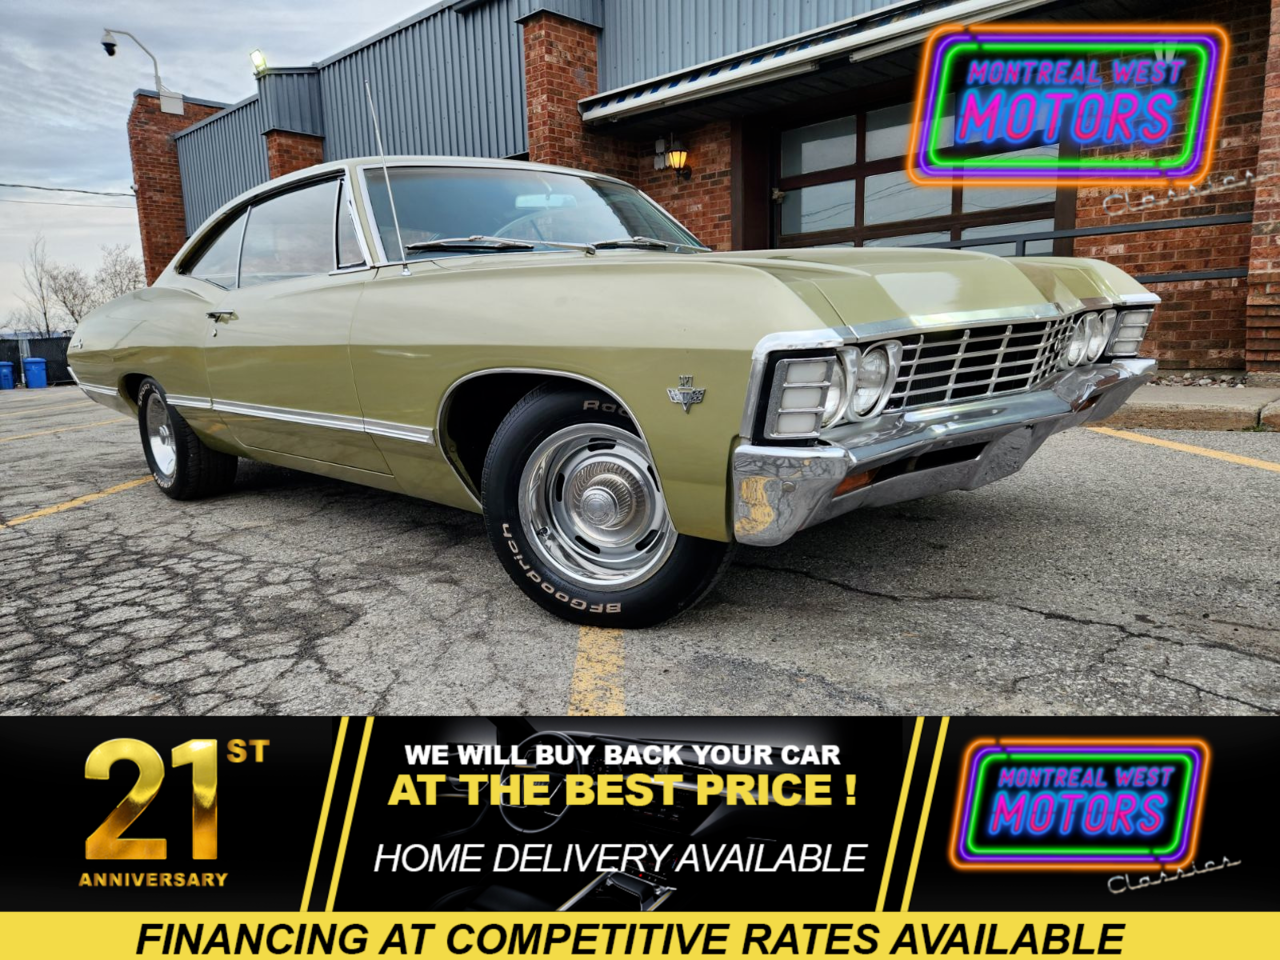 1967 Chevrolet Impala Garage kept at its life ! All steel body 79317 ori